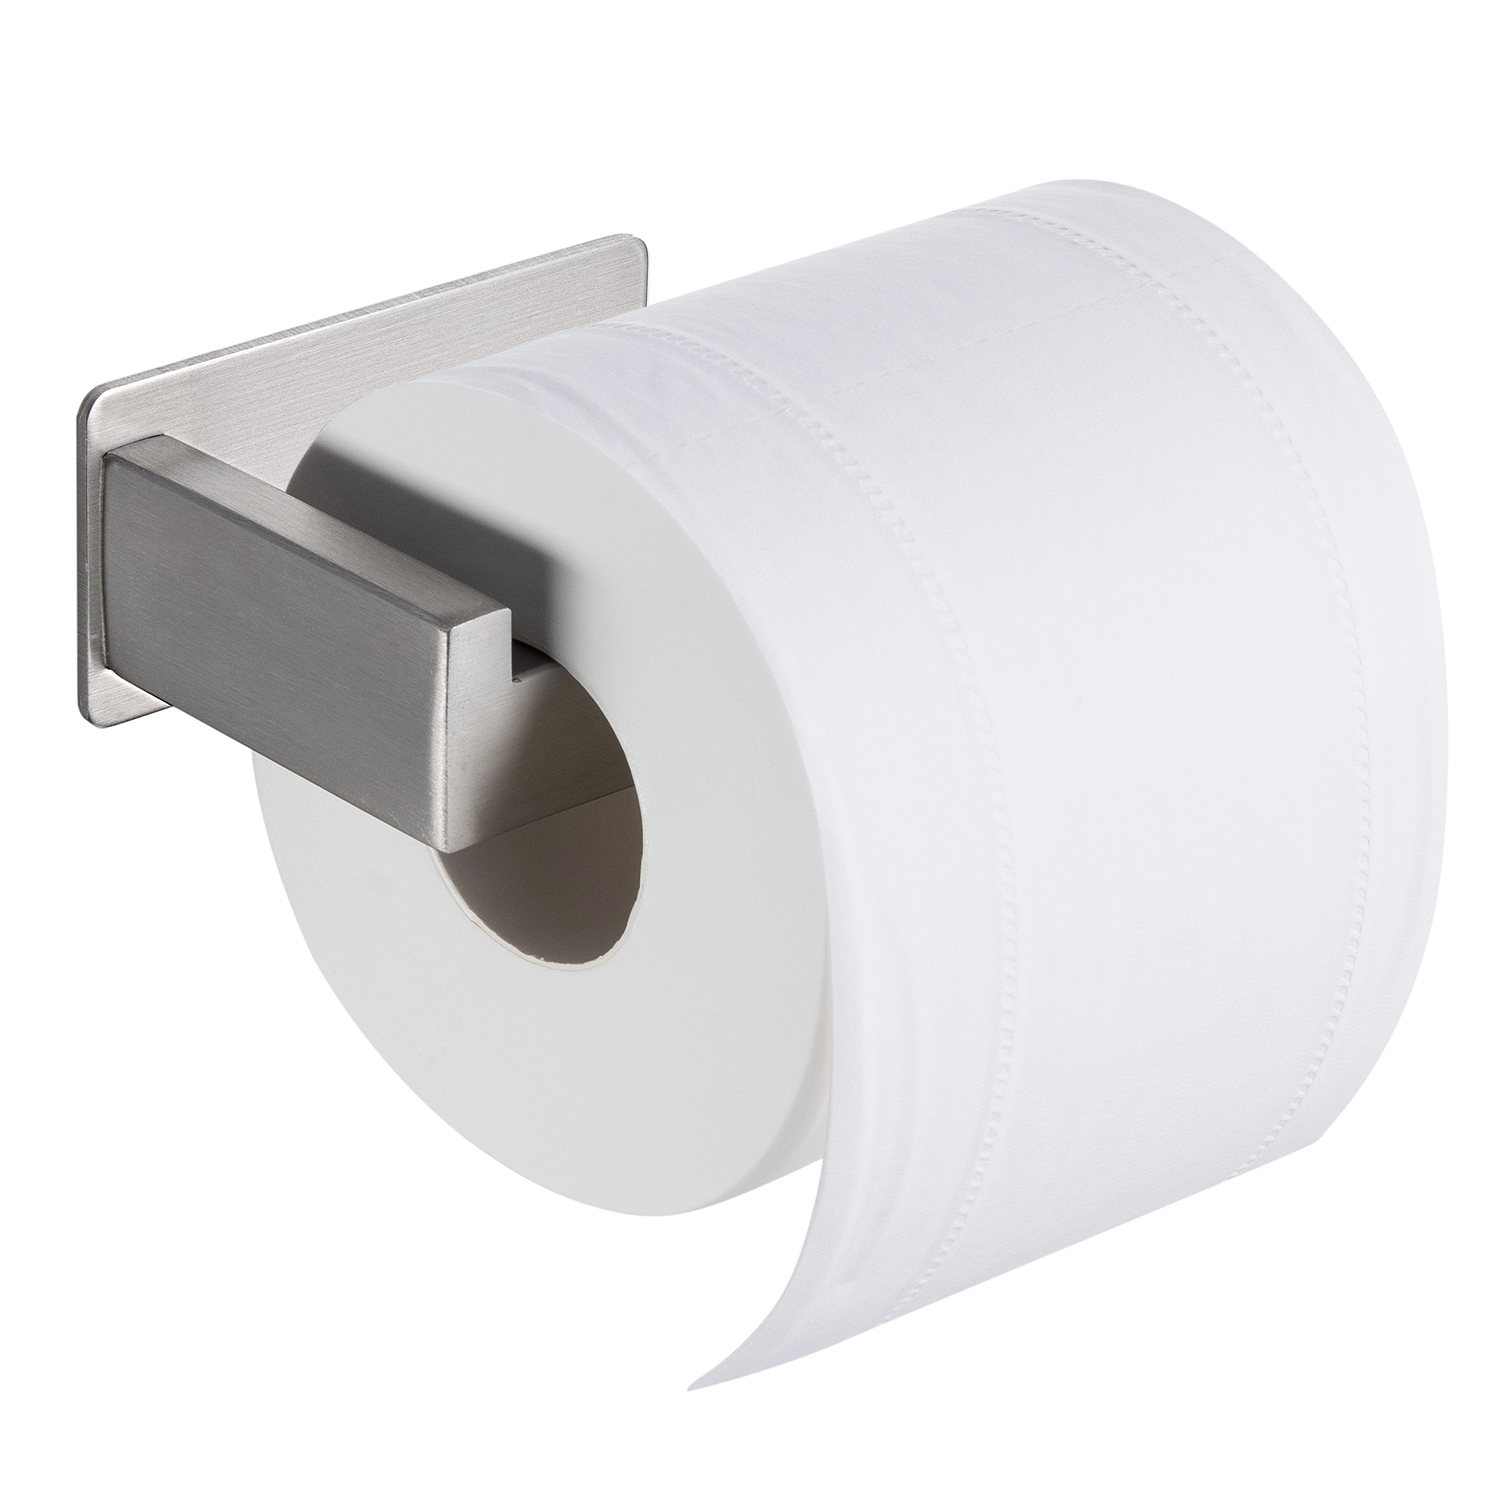 https://cdn2.momjunction.com/wp-content/uploads/product-images/yigii-toilet-paper-holder_afl359.jpg